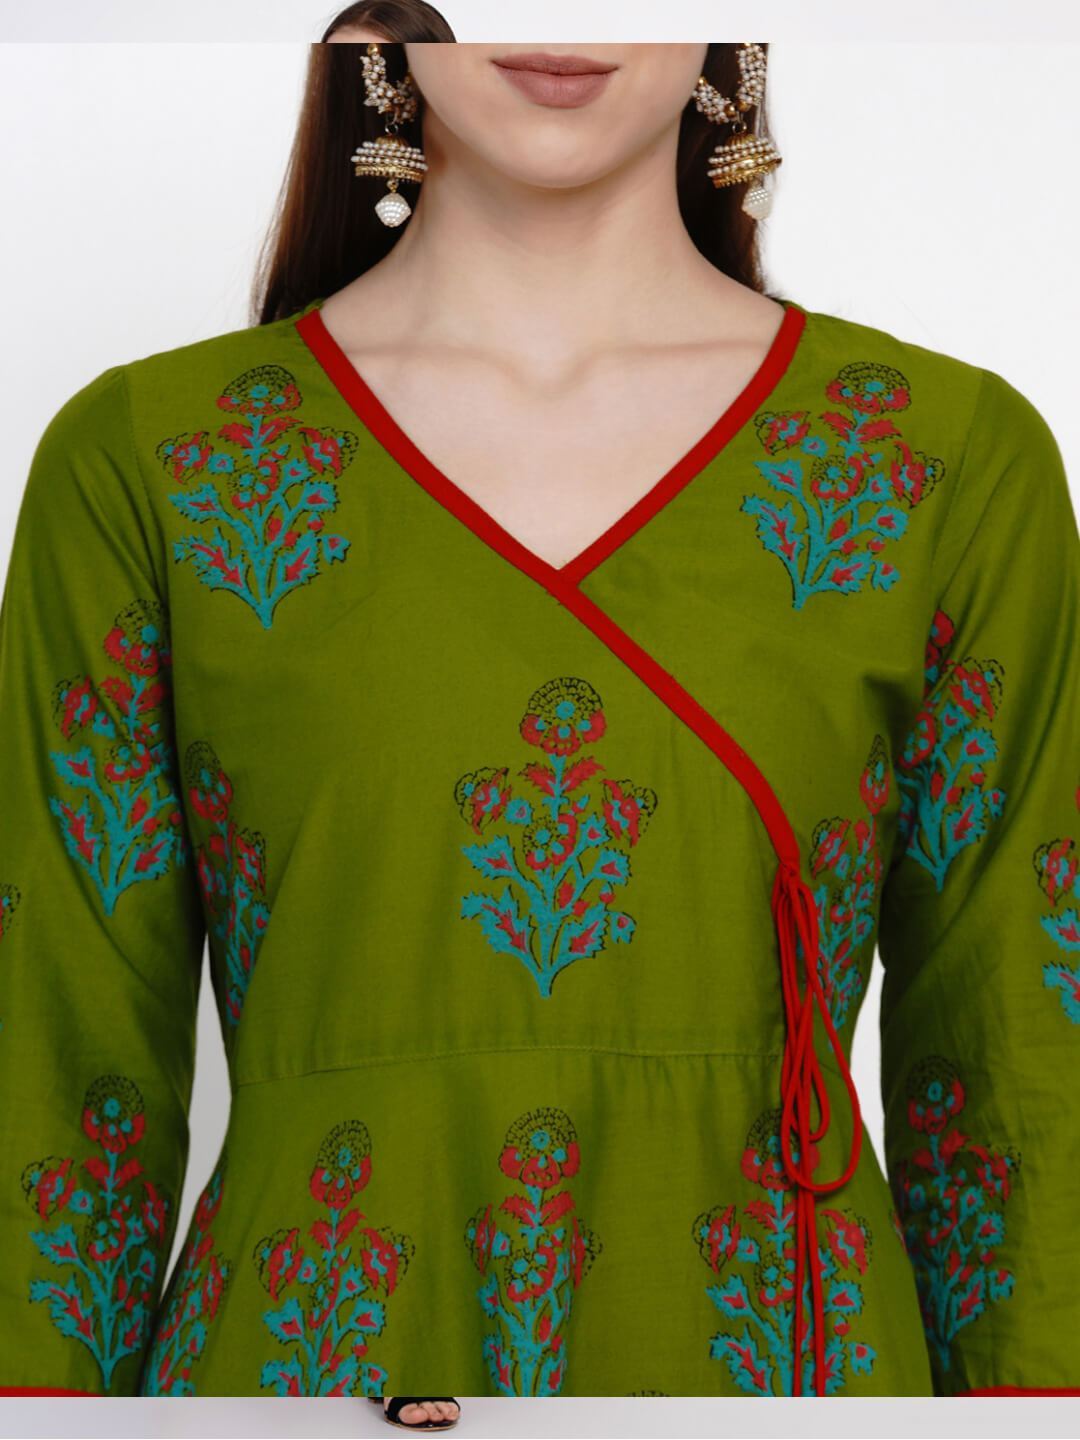 Green Overlap Cotton Anarkali with Ajrakh Hand Block Print - Inayat